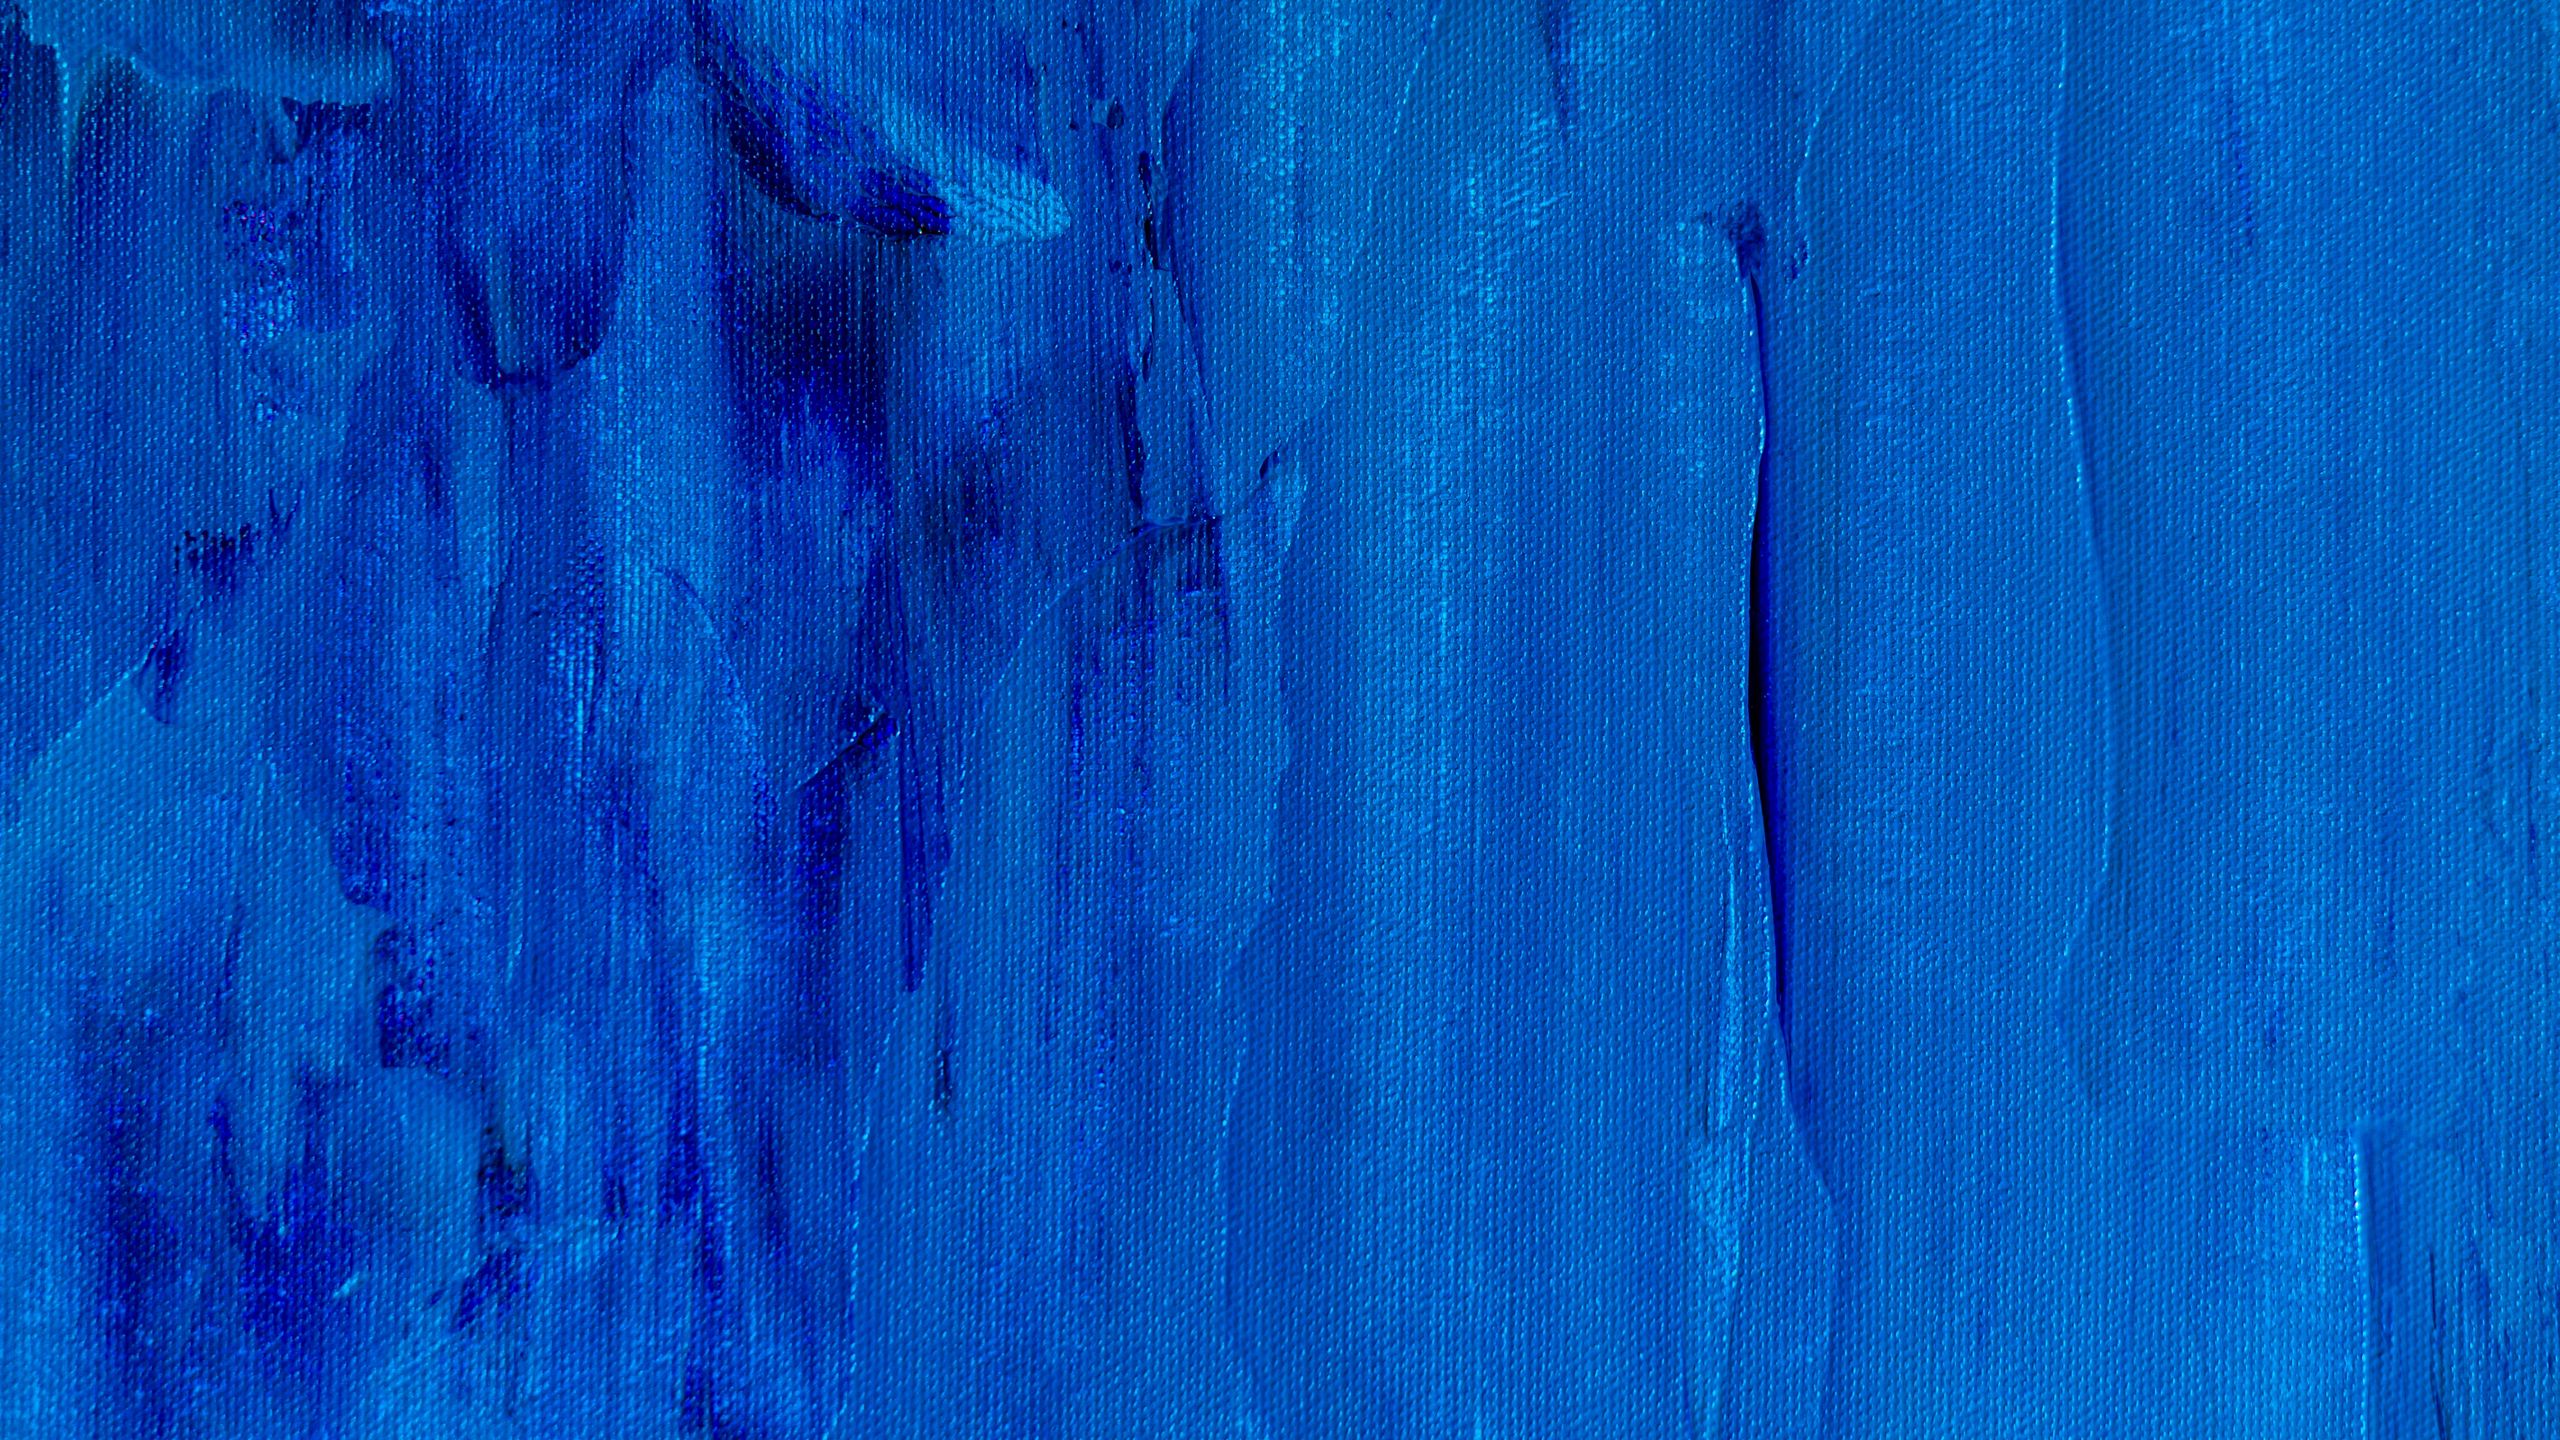 Download wallpaper 2560x1440 canvas, paint, blue, texture widescreen 16:9 HD background